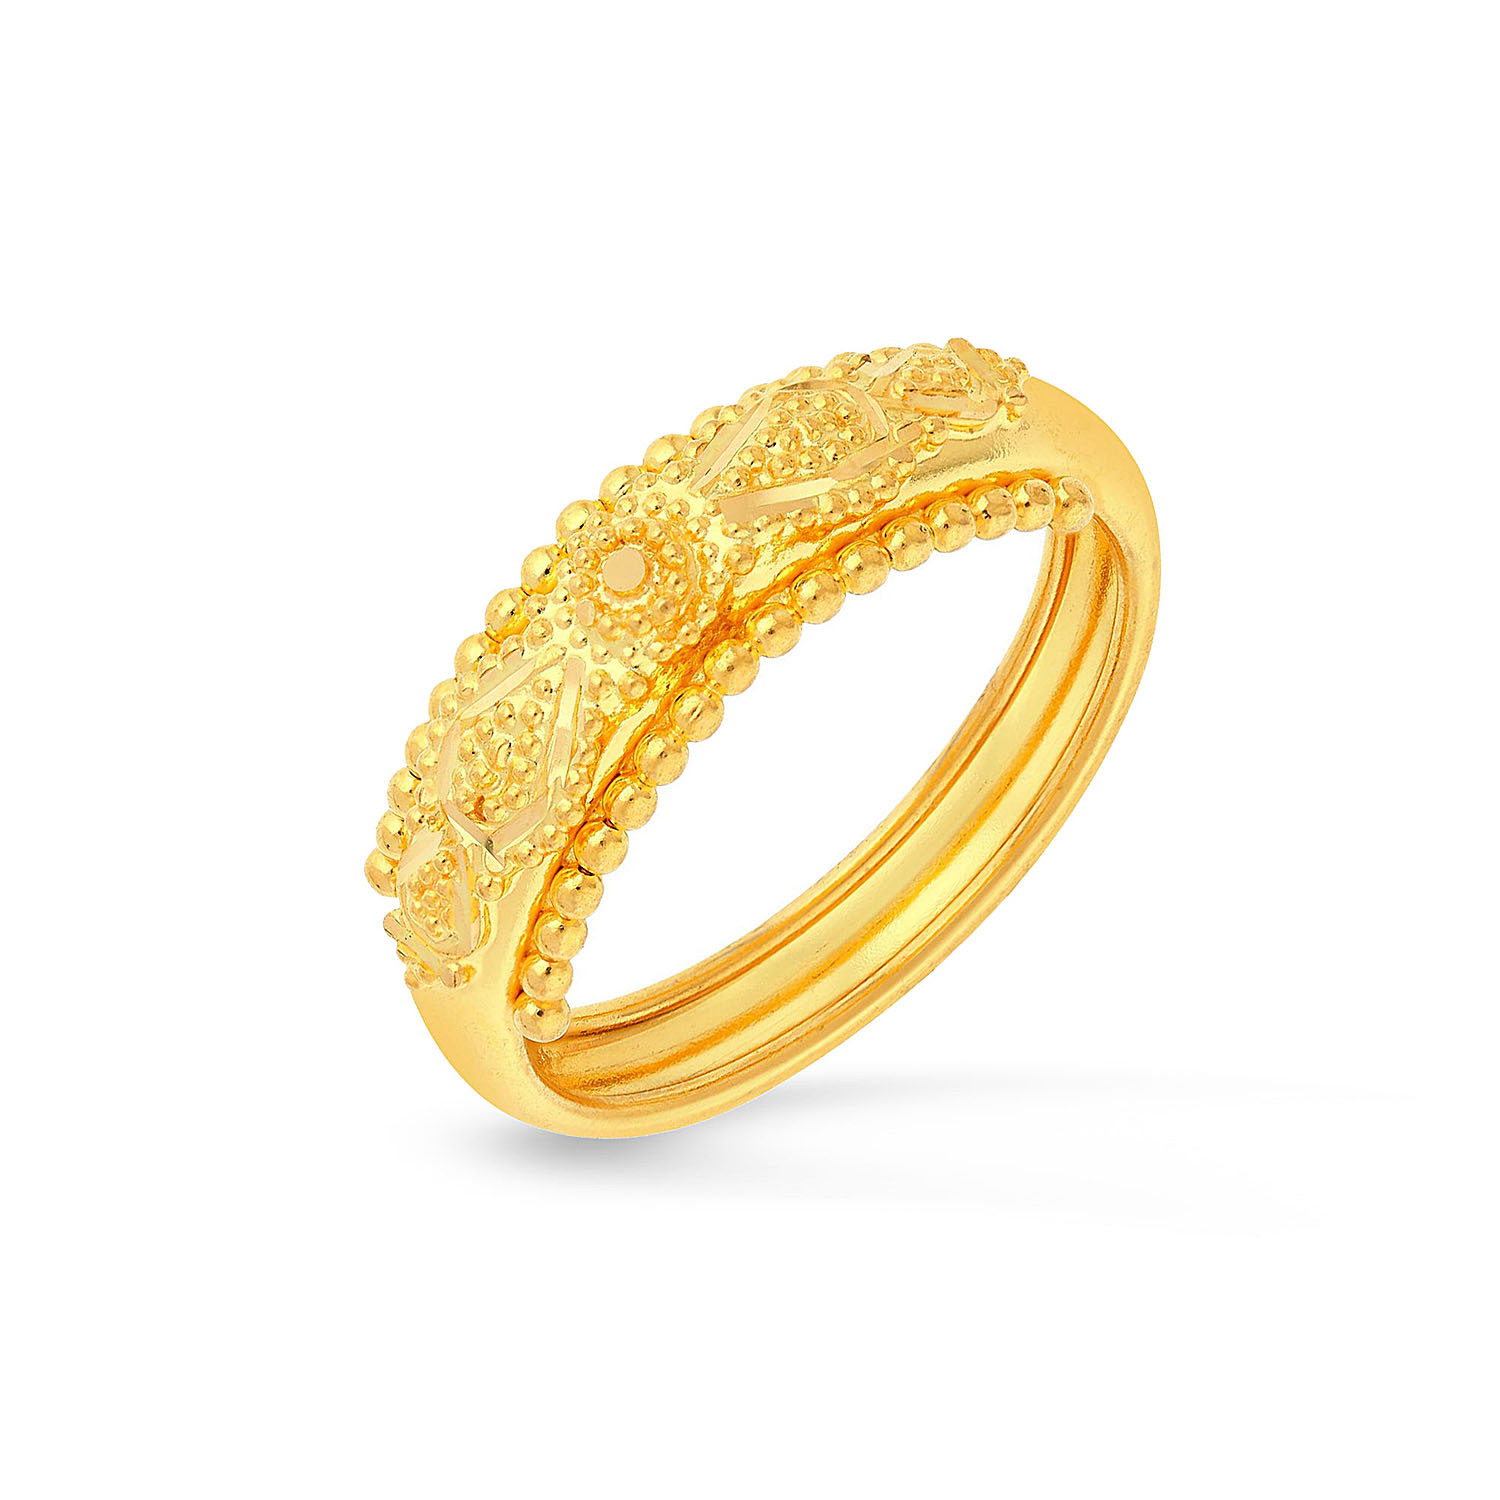 Buy Gold Rings for Women by Malabar Gold & Diamonds Online | Ajio.com